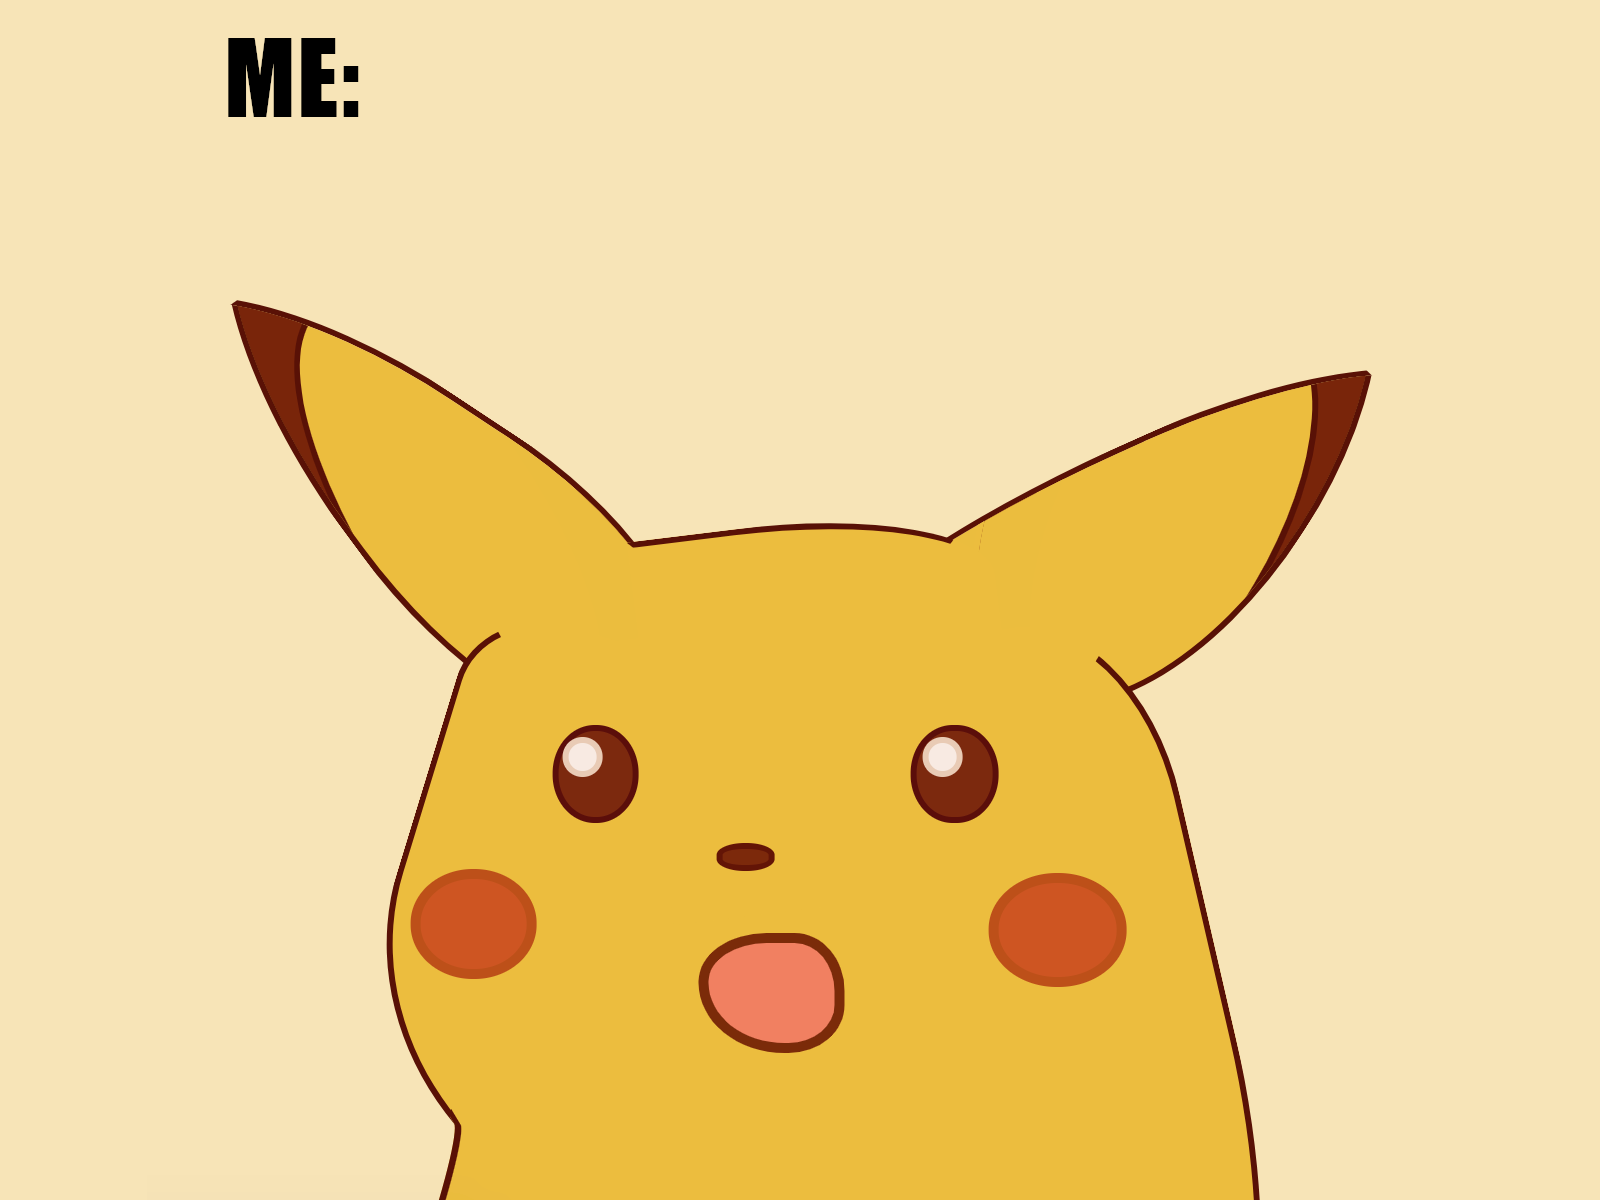 Pixilart - Surprised pikachu meme by Creativity1012